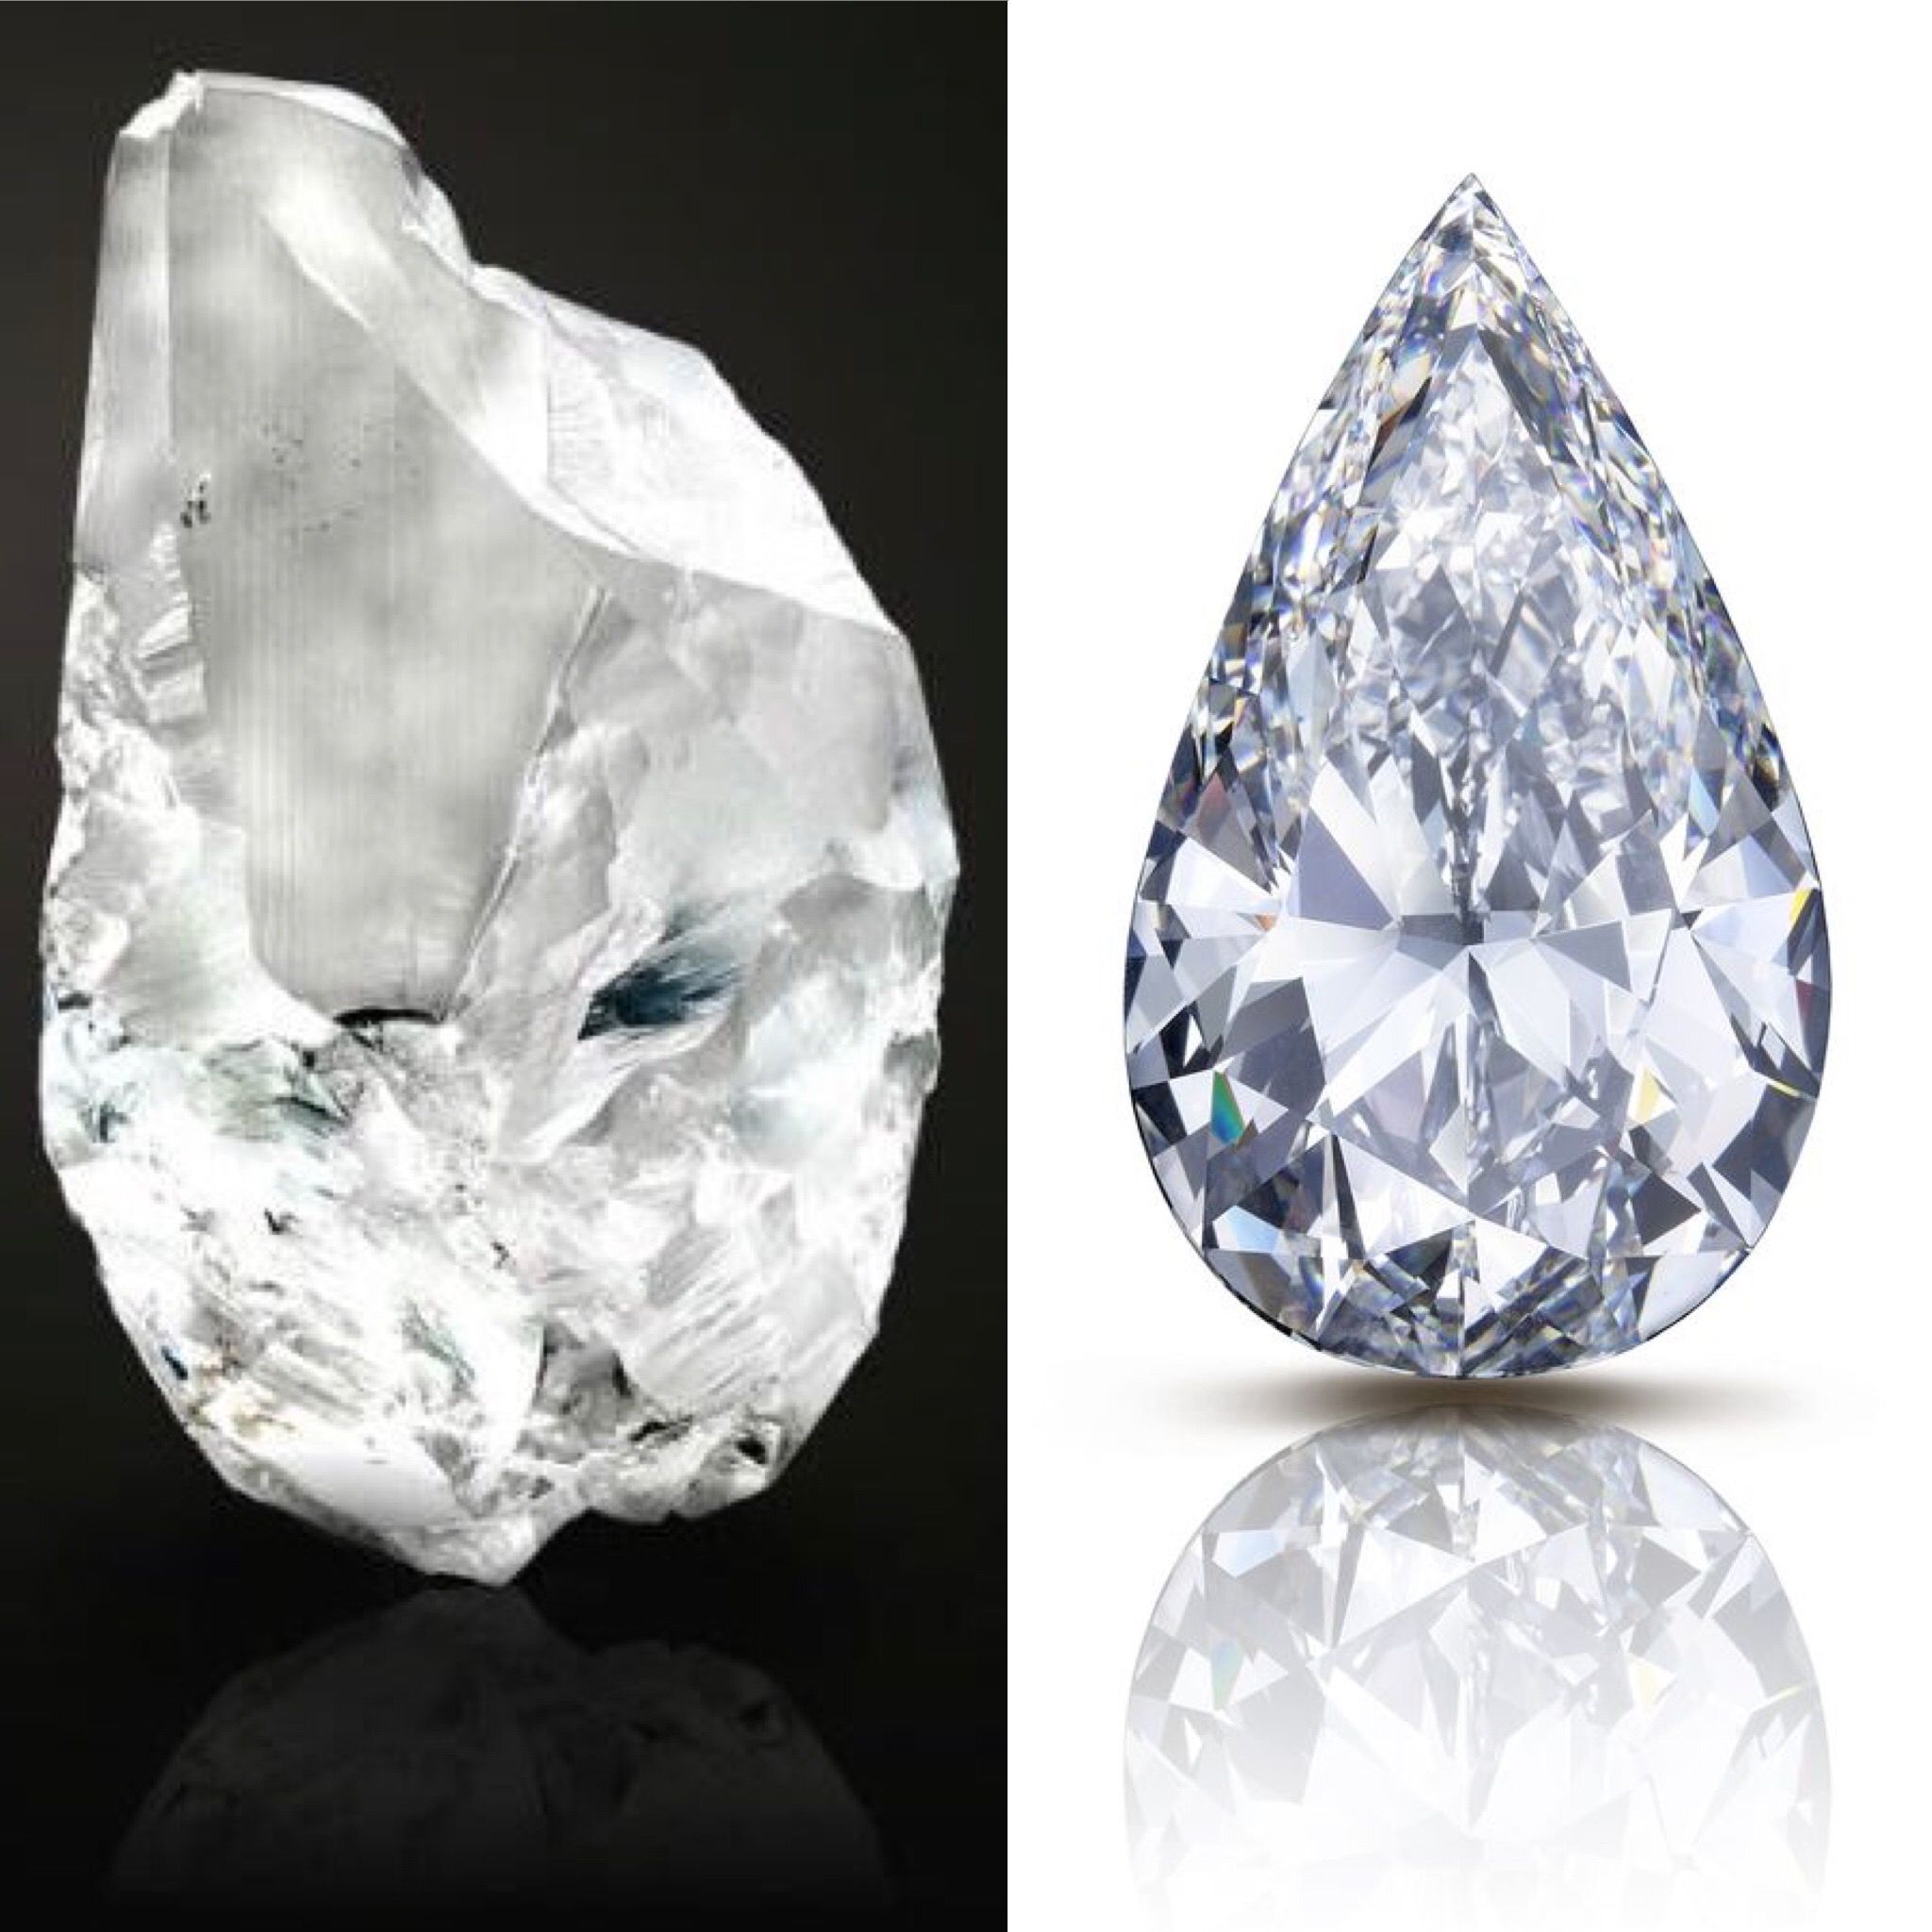 Diamond crystal. Алмаз неограненный камень. Кристал диамонд. Алмаз Кристалл неограненный.